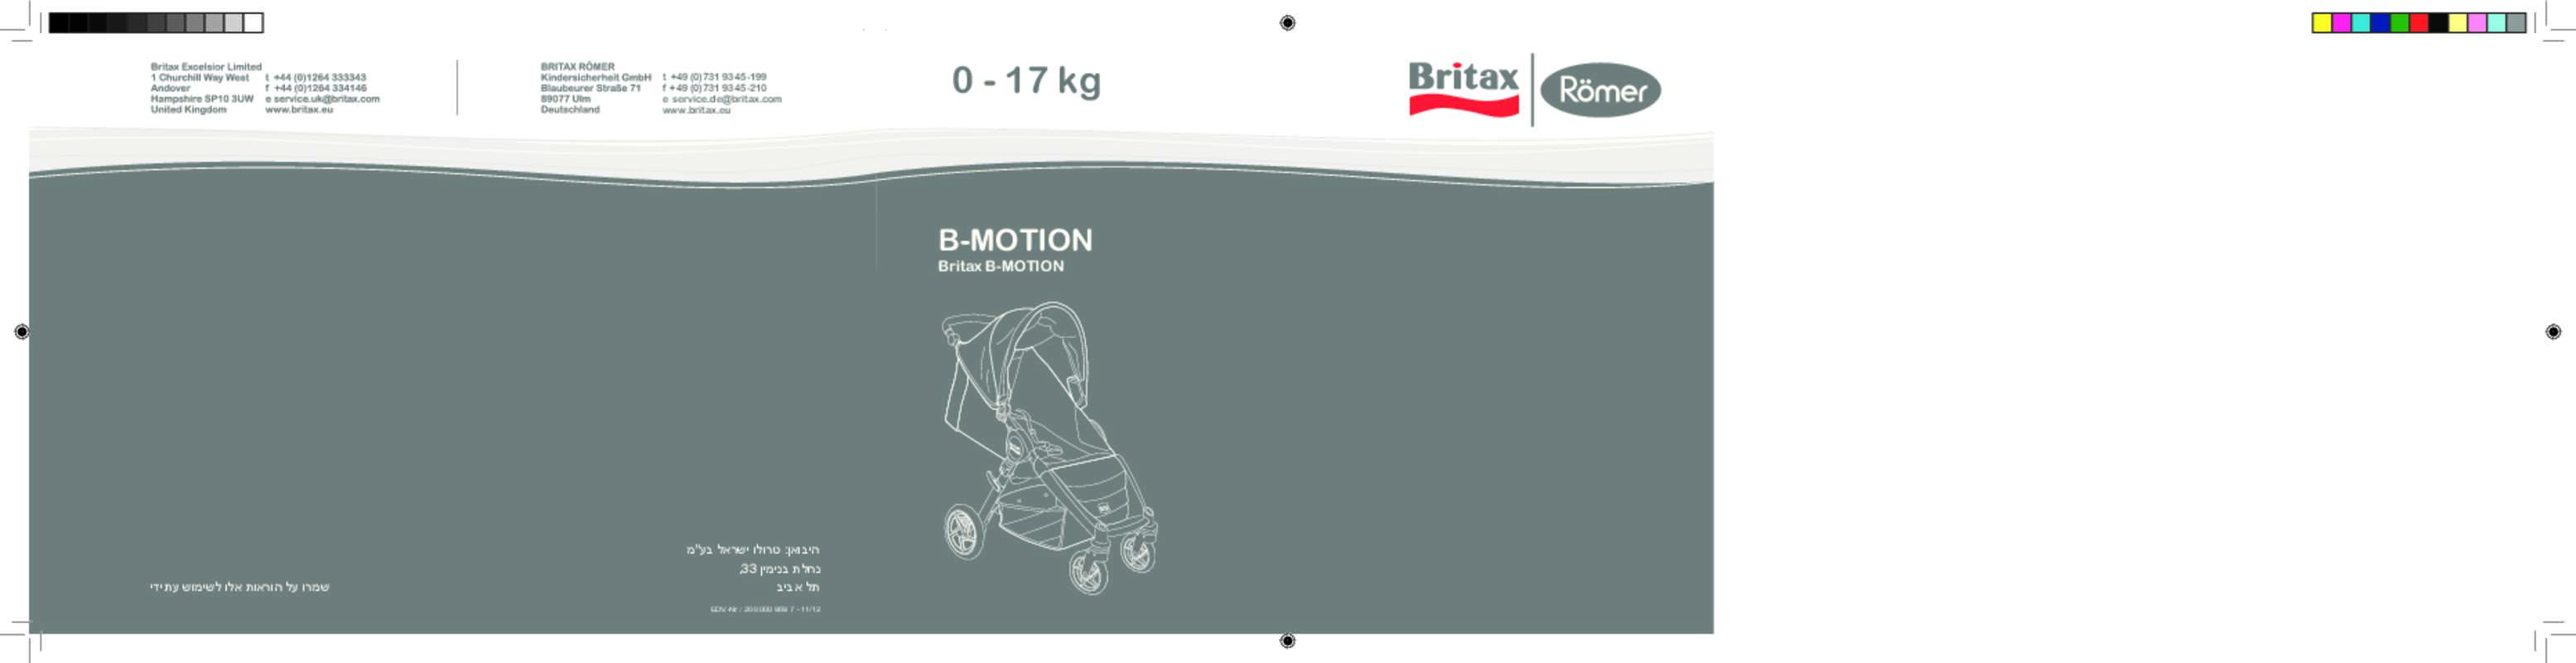 Guide utilisation BRITAX B-MOTION  de la marque BRITAX